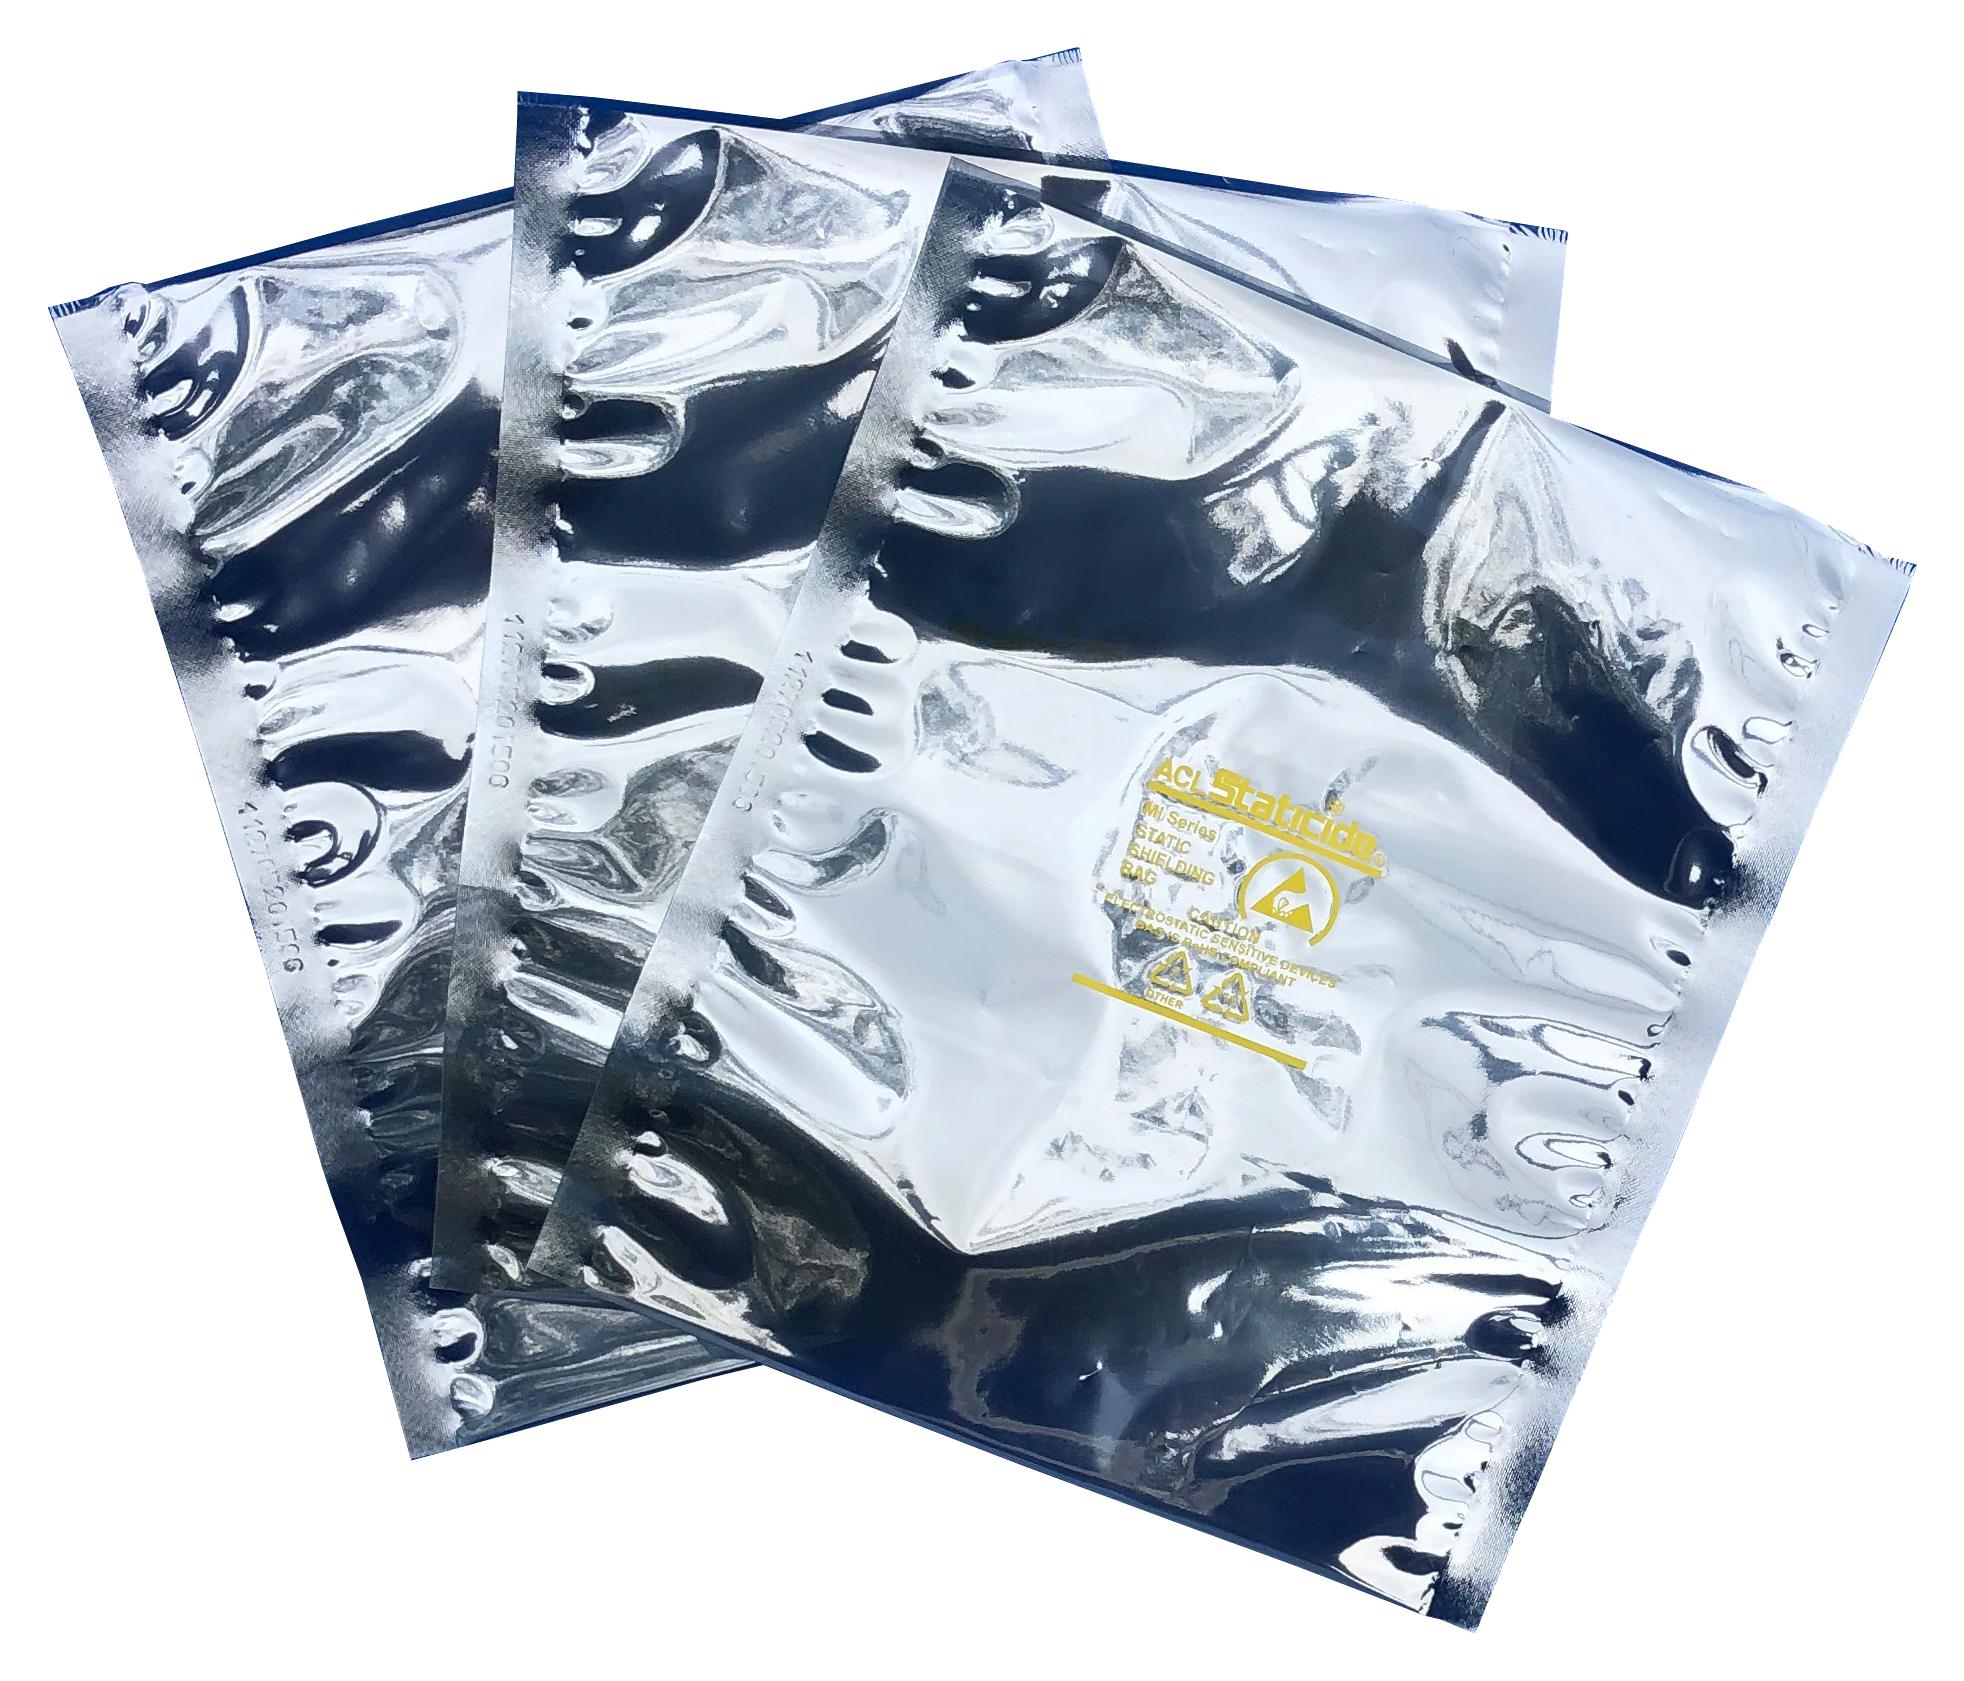 Acl Staticide Mi46 Static Shielding Bag, Metal-In, 4 X 6